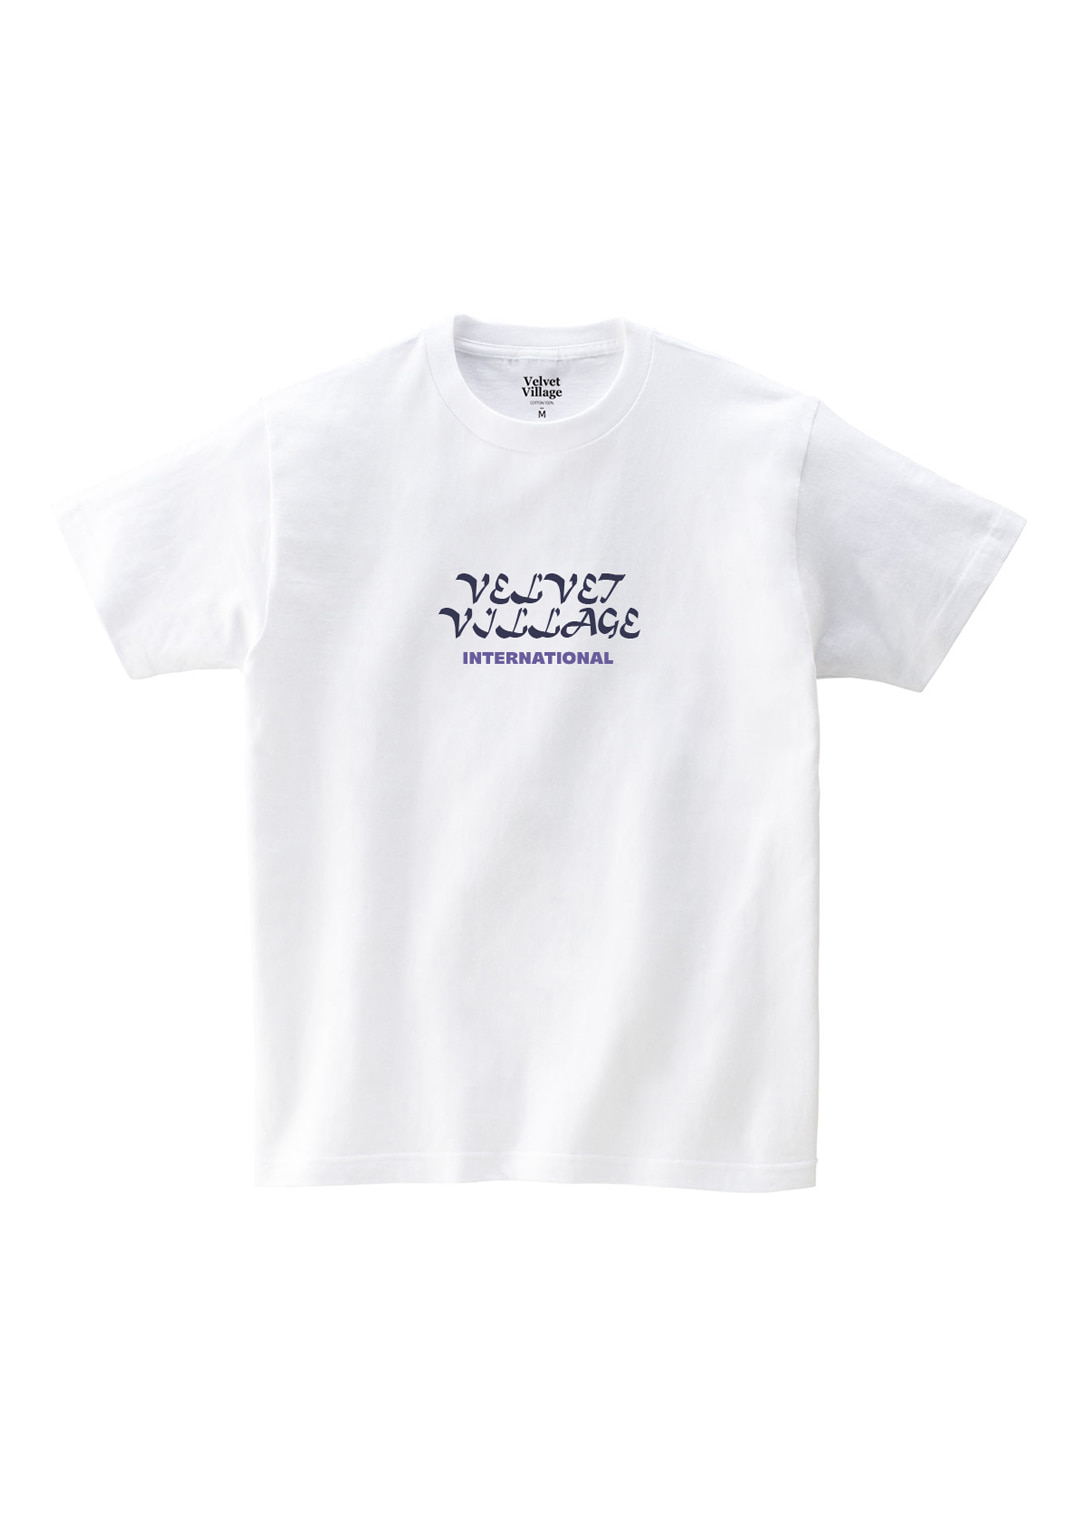 International T-shirt (White)